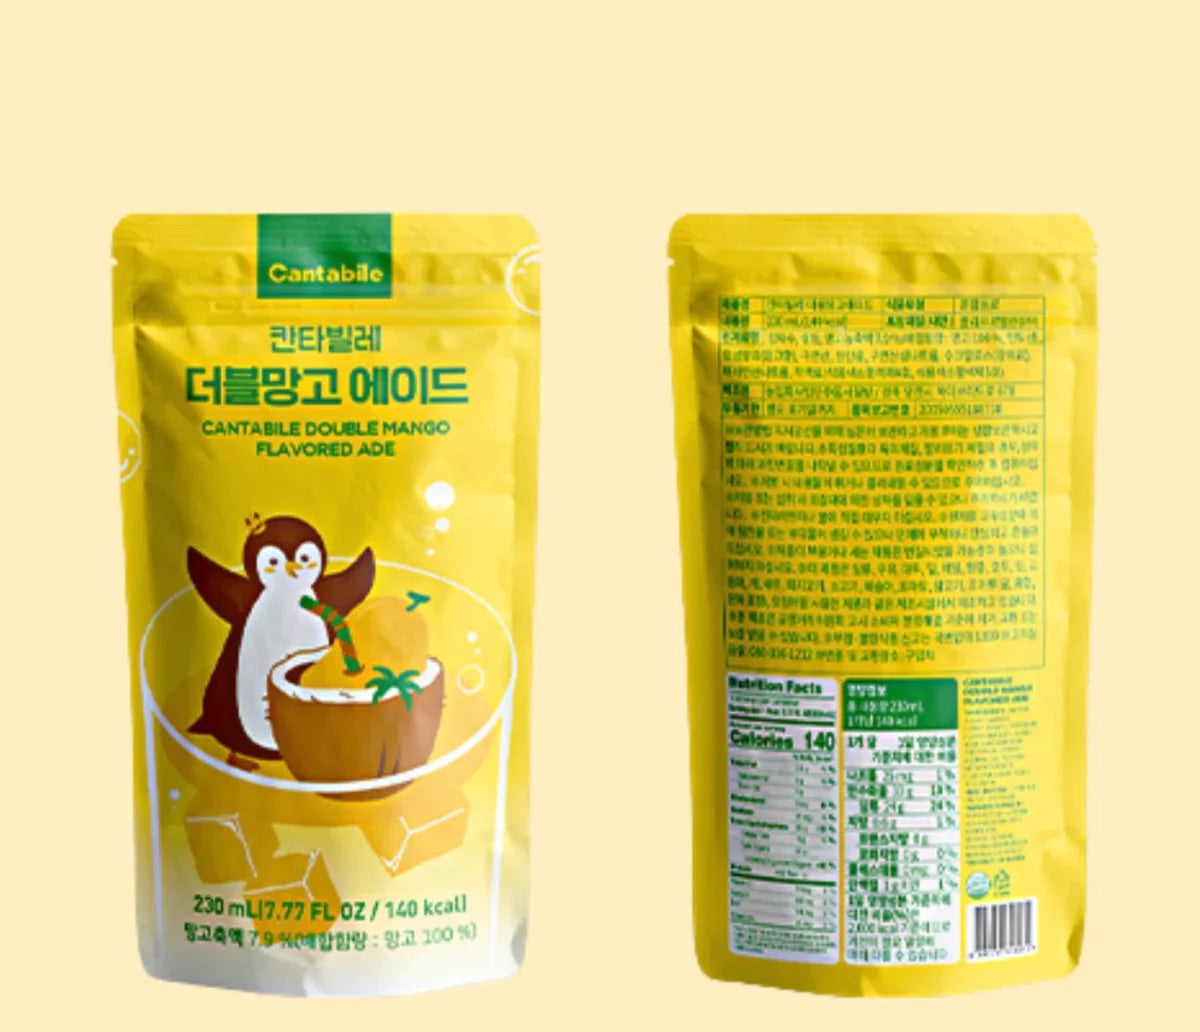 Cantabile Double Mango Flavored Ade - 230mL/7.77oz-2